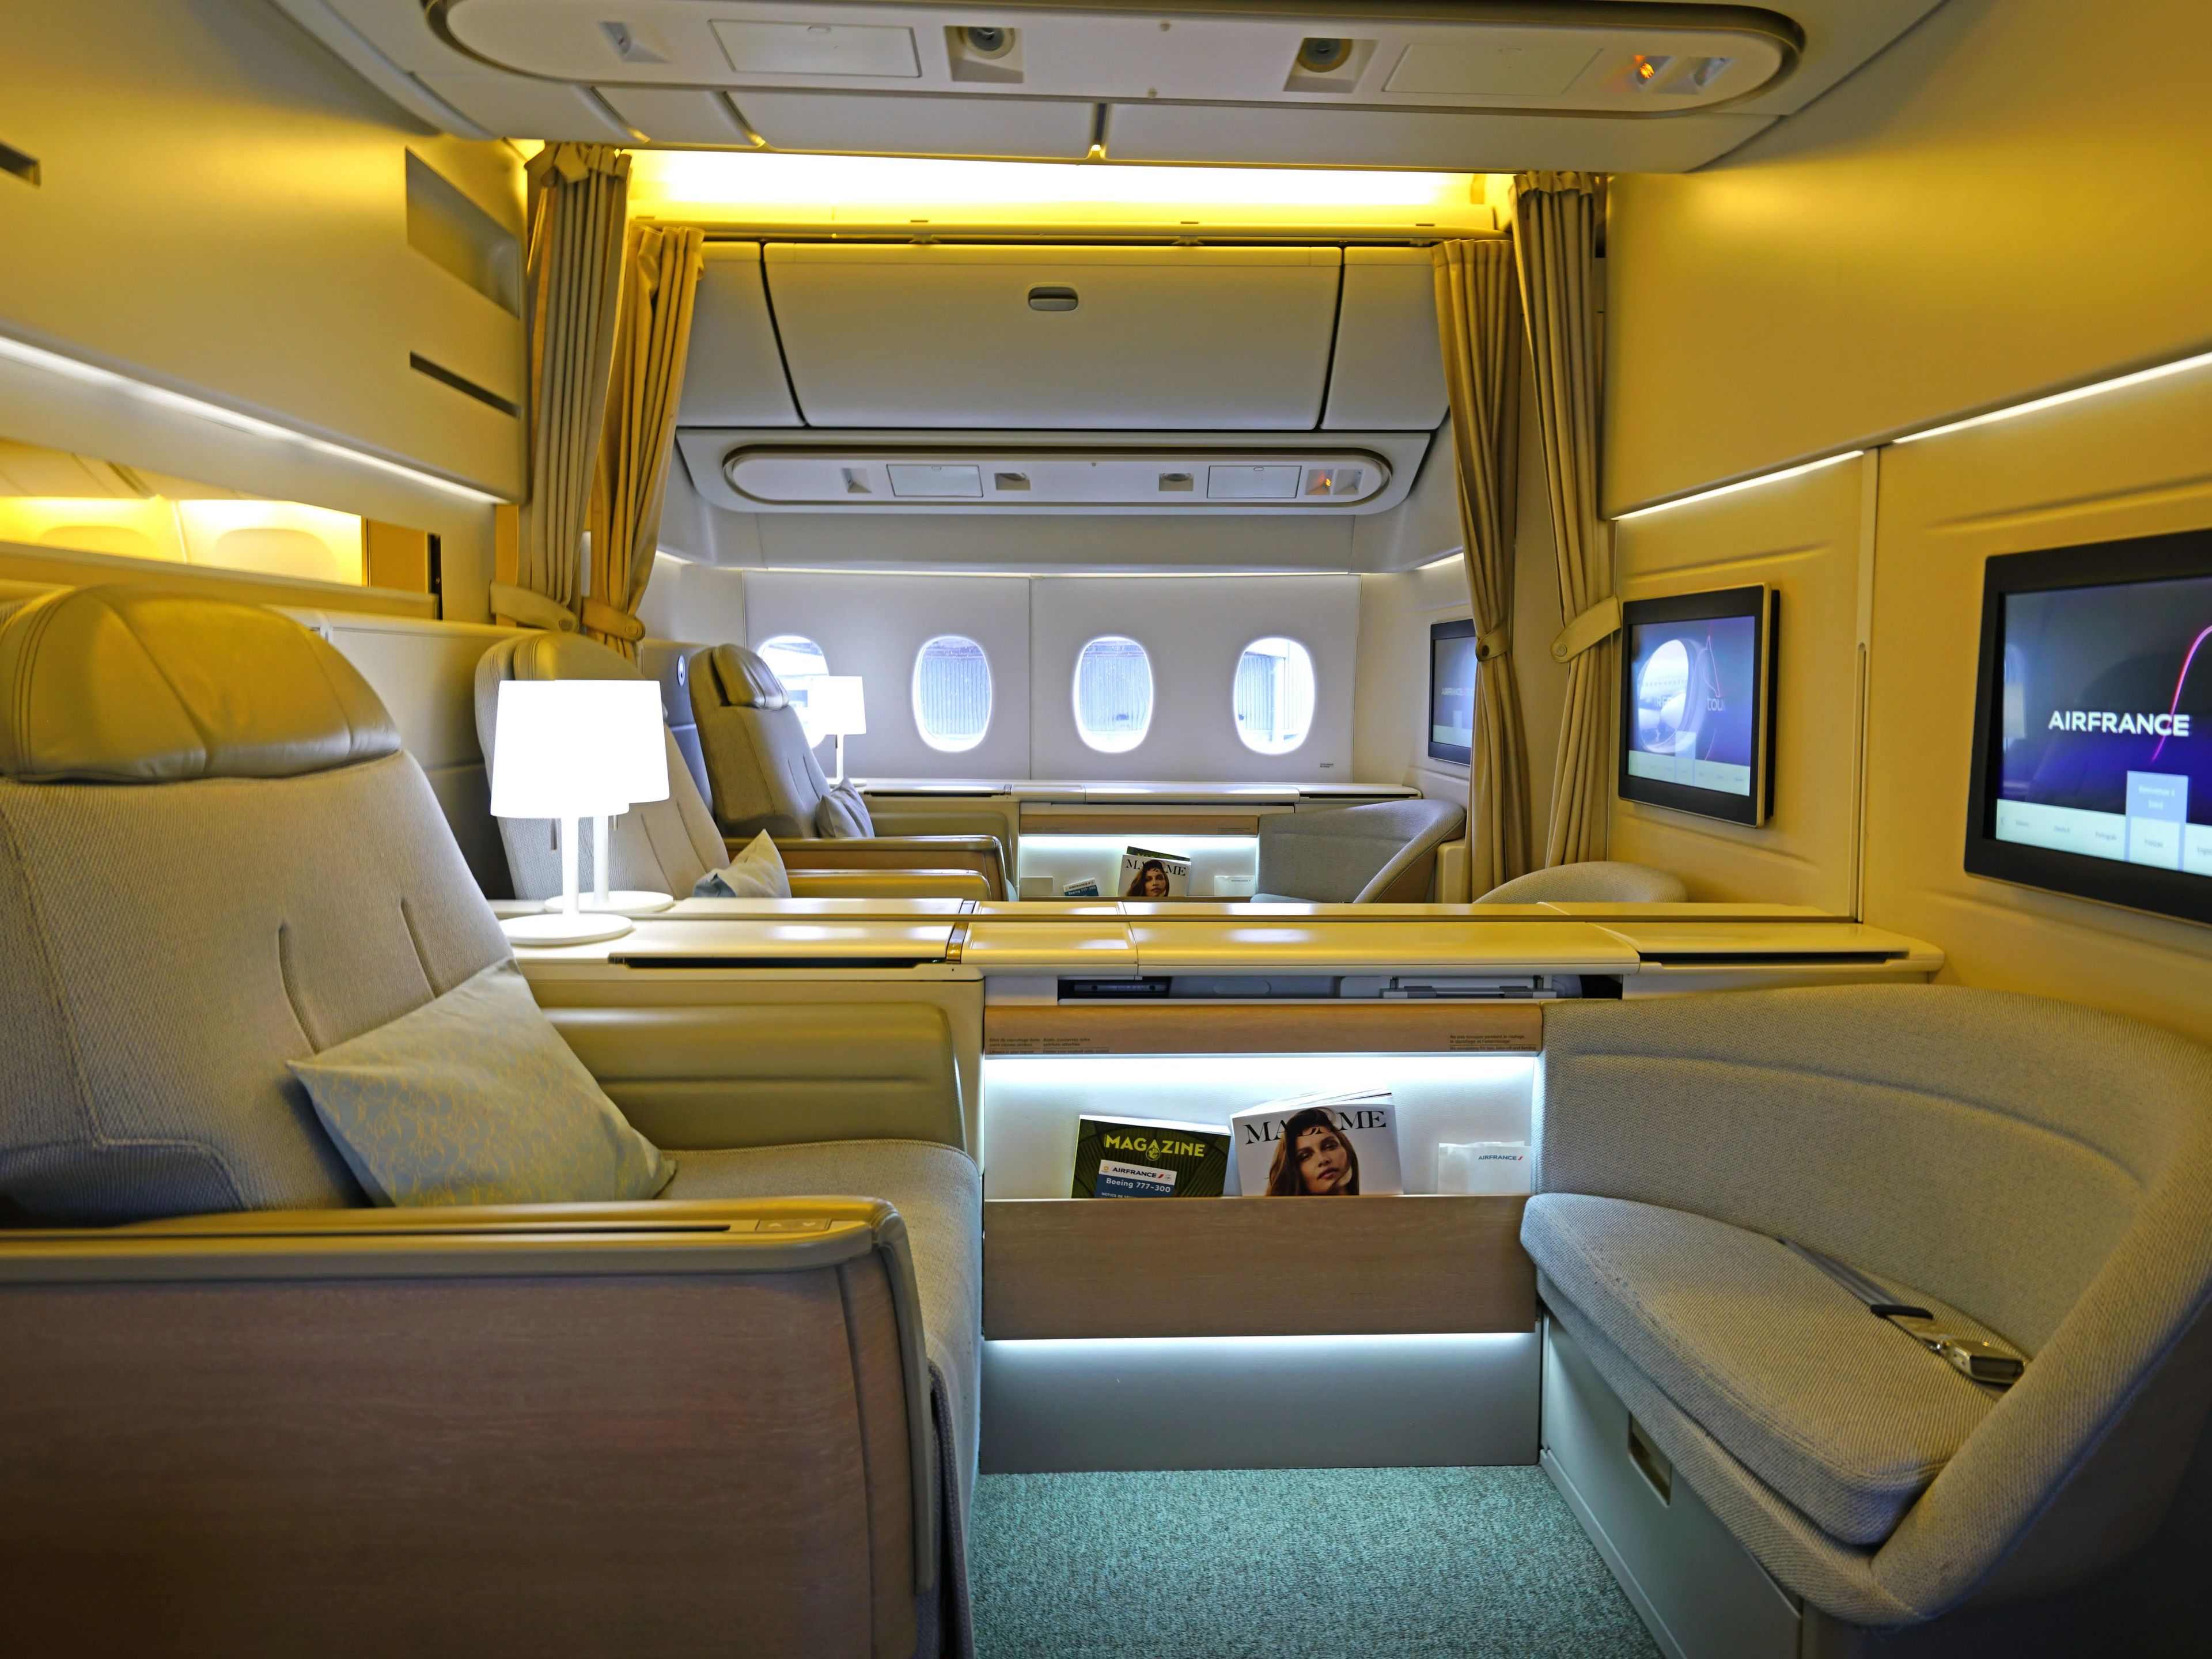 Air France first class cabin.